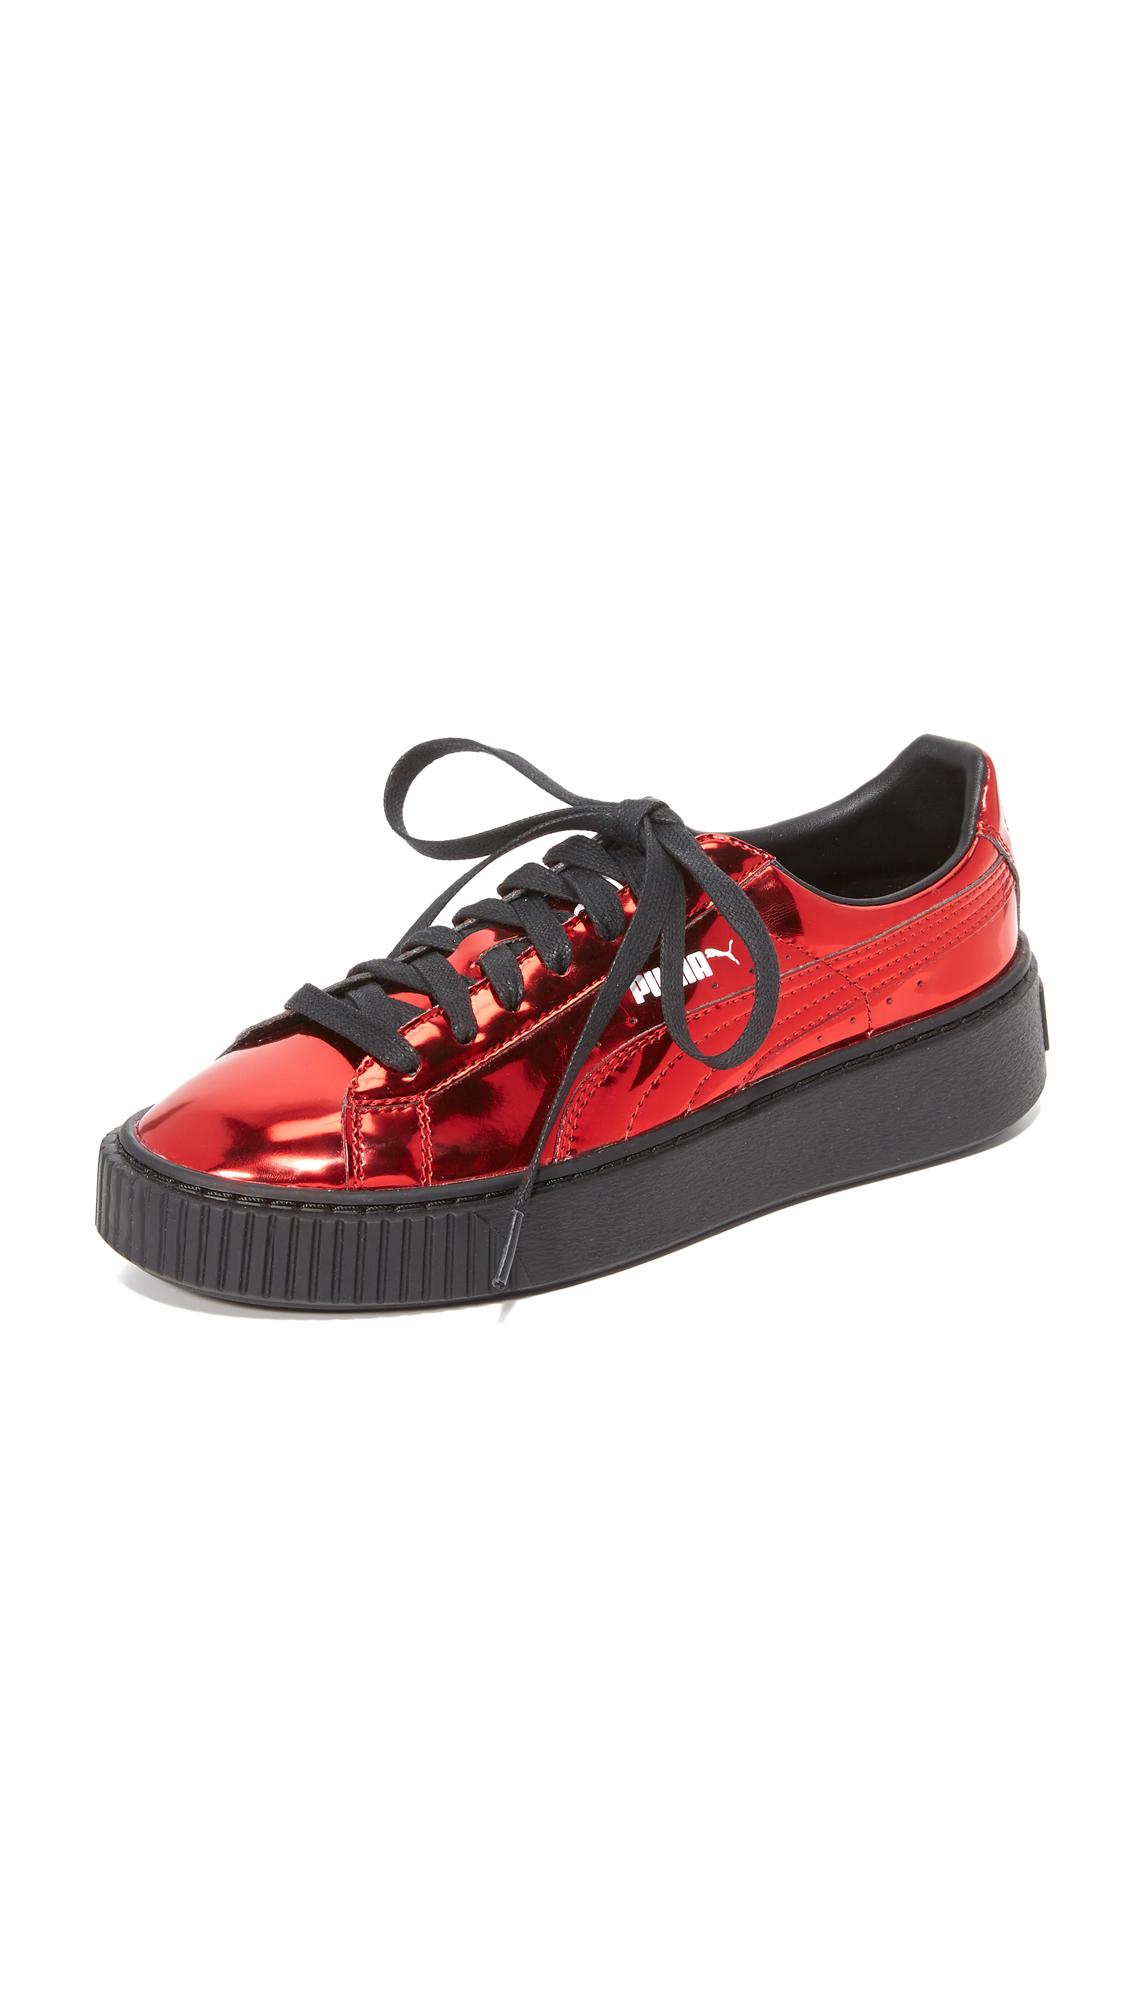 Lyst - Puma Creeper Metallic Sneakers in Red